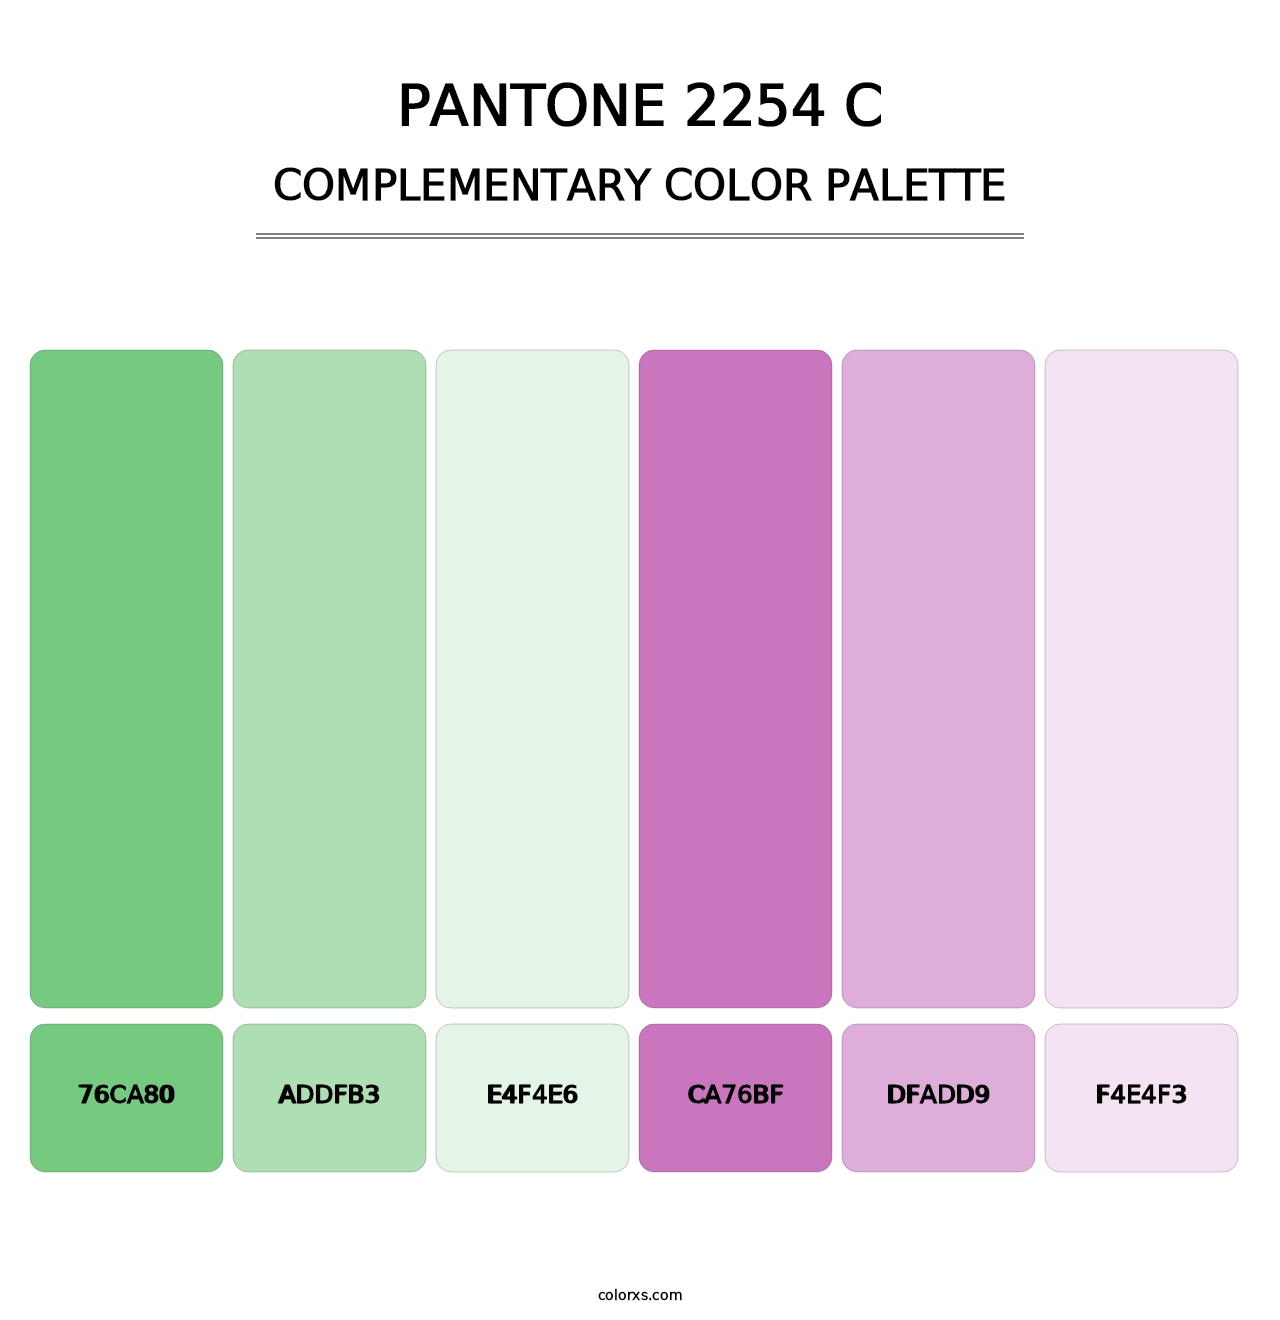 PANTONE 2254 C - Complementary Color Palette